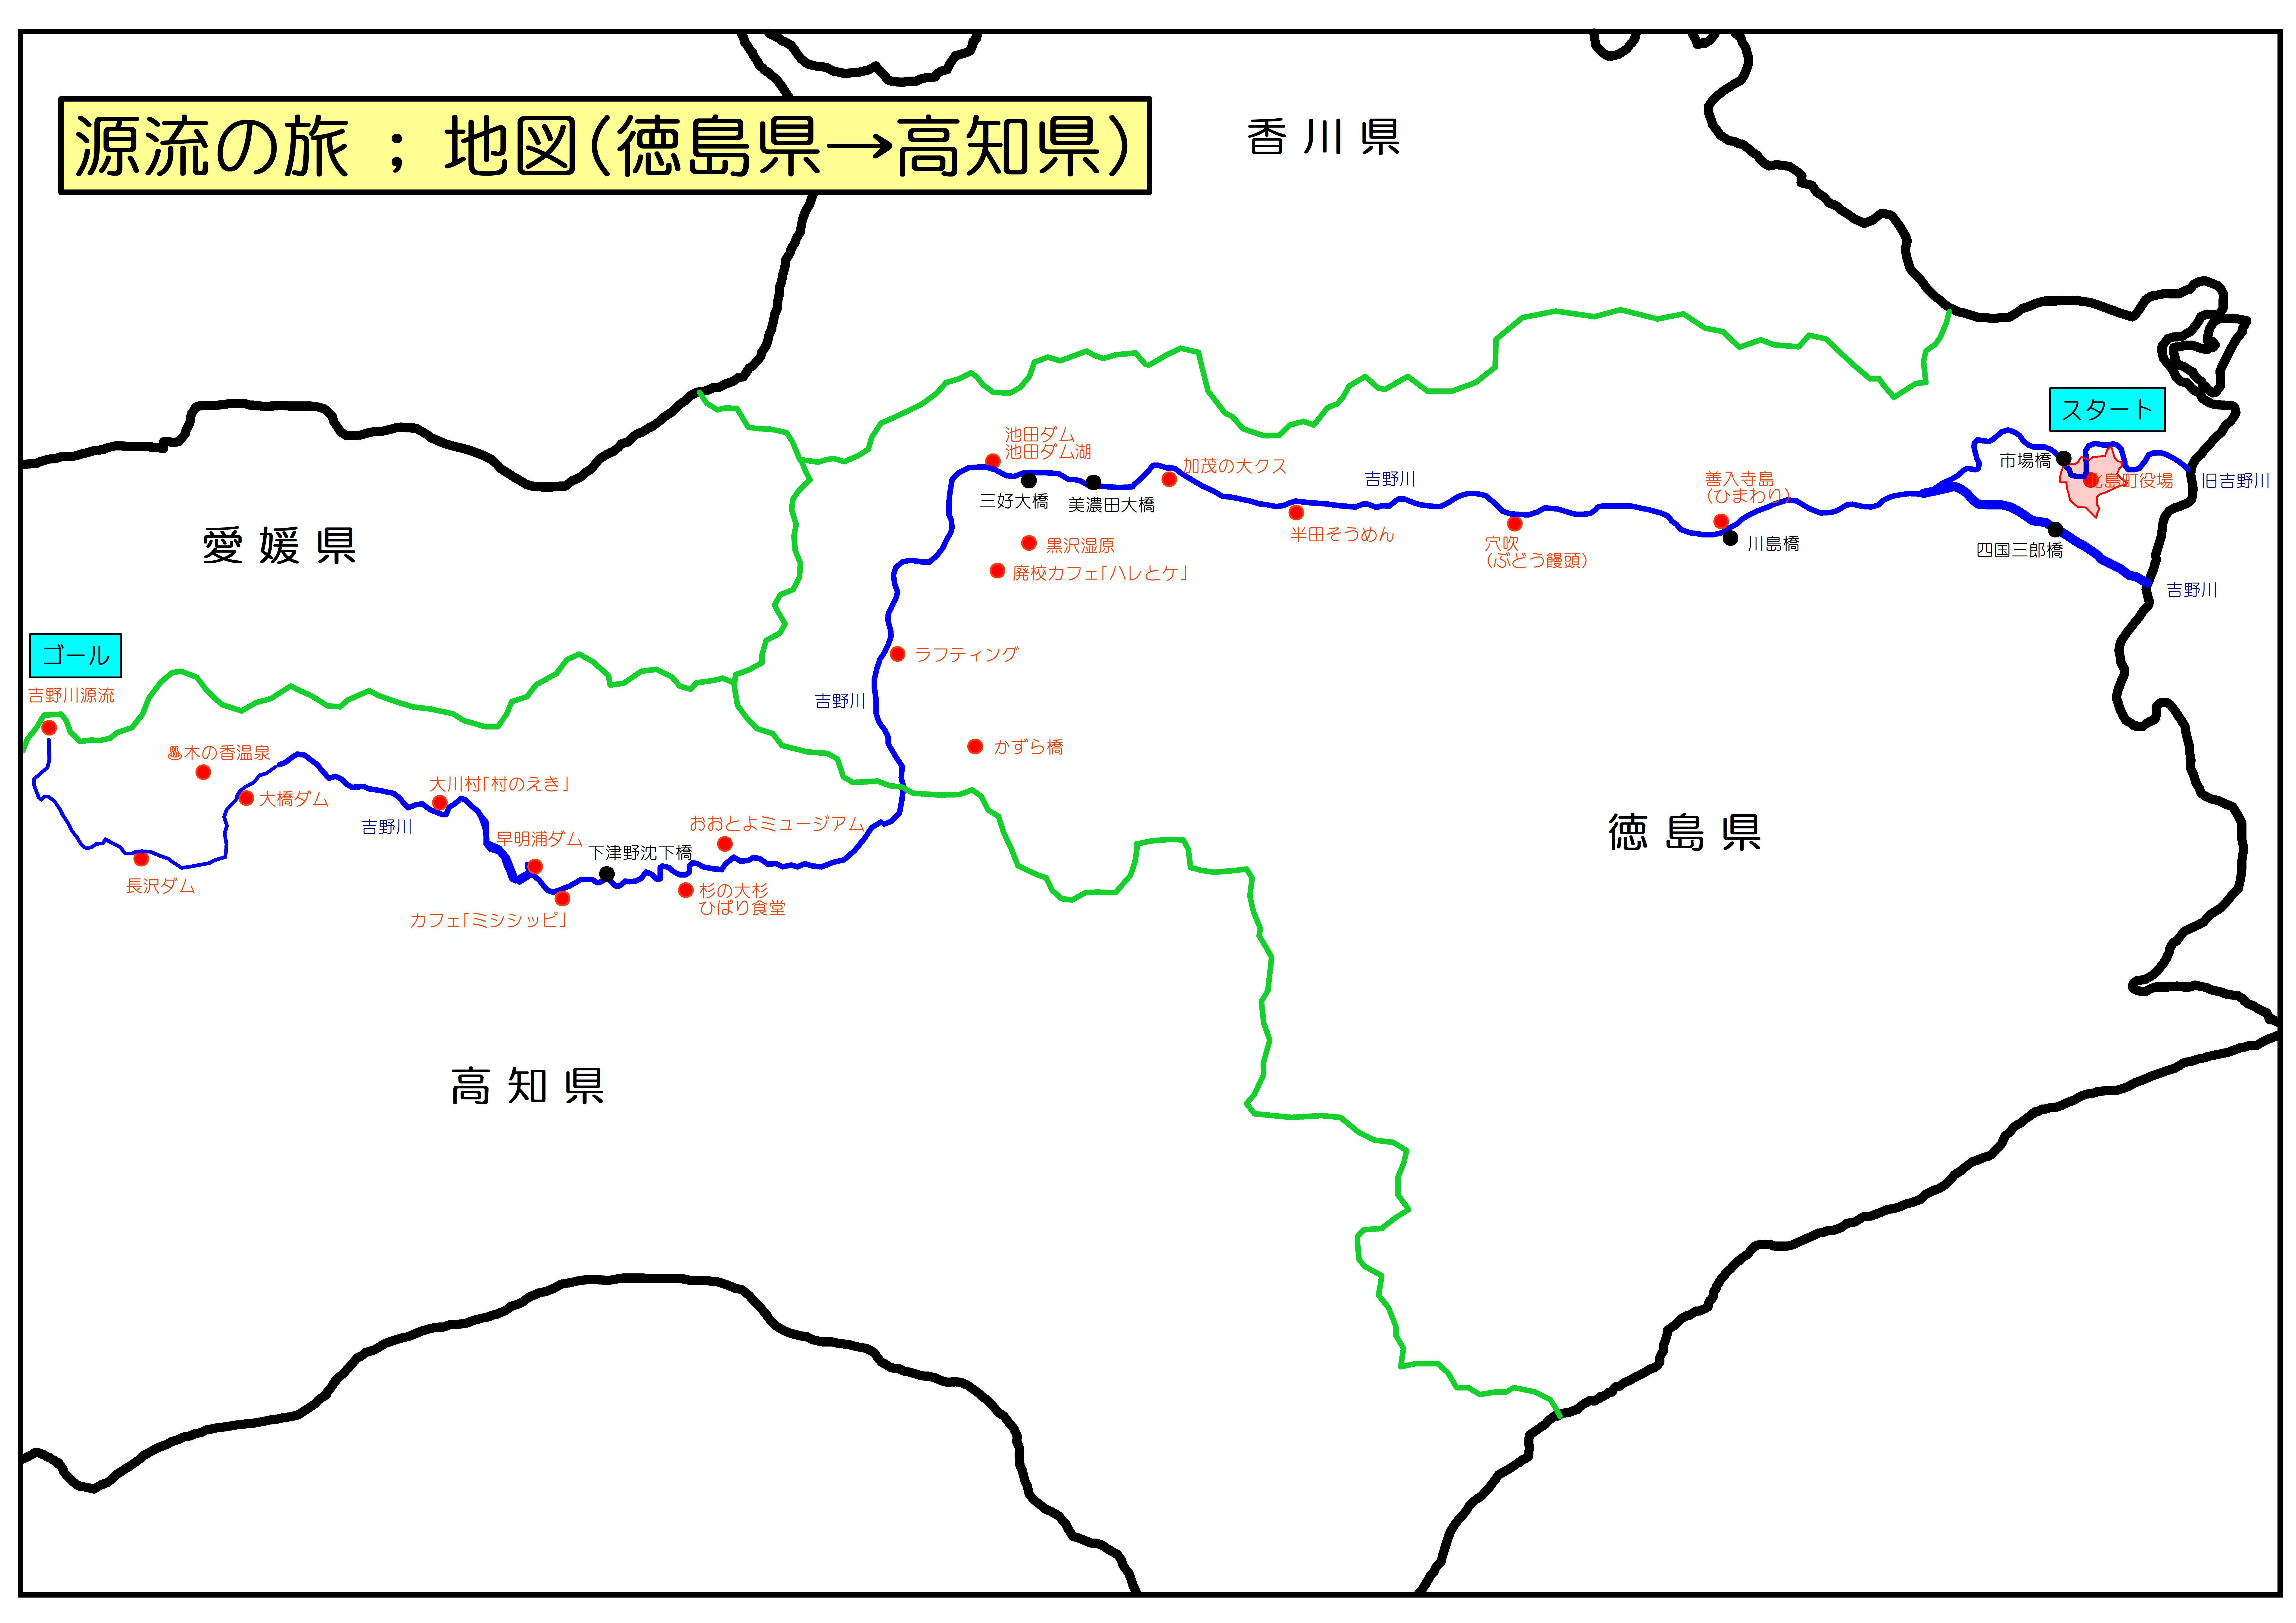 源流の旅(全体地図) (2).jpg